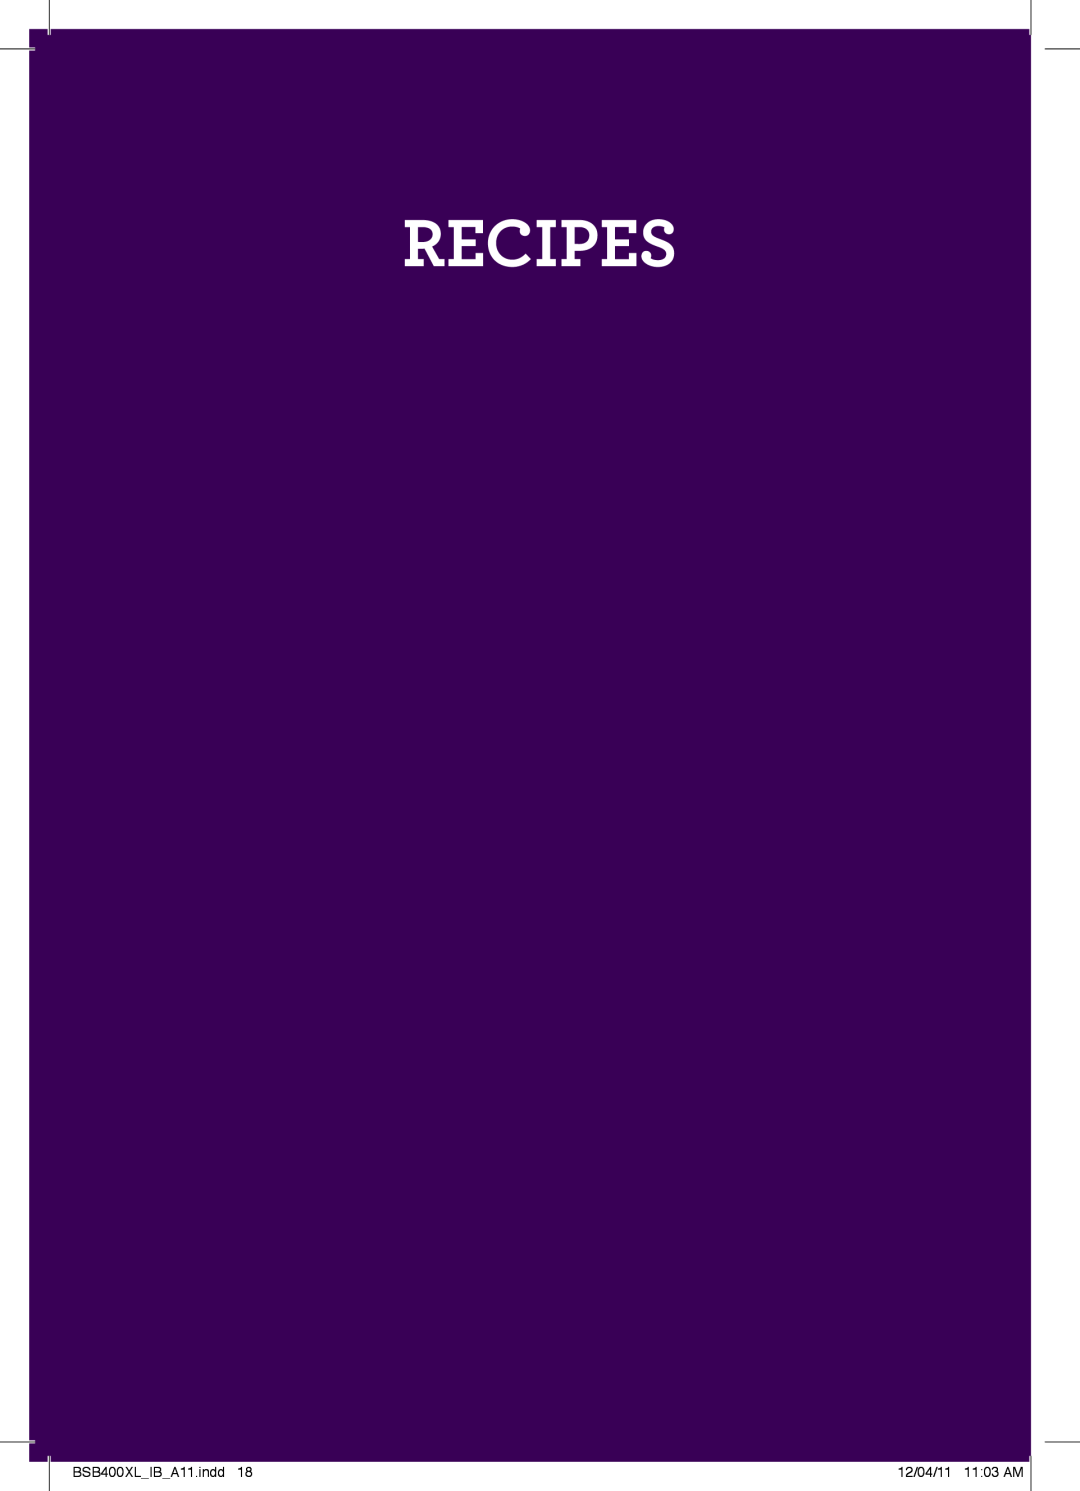 Breville manual Recipes, Typeset, BSB400XLIBA11.indd, 12/04/11 1103 AM 